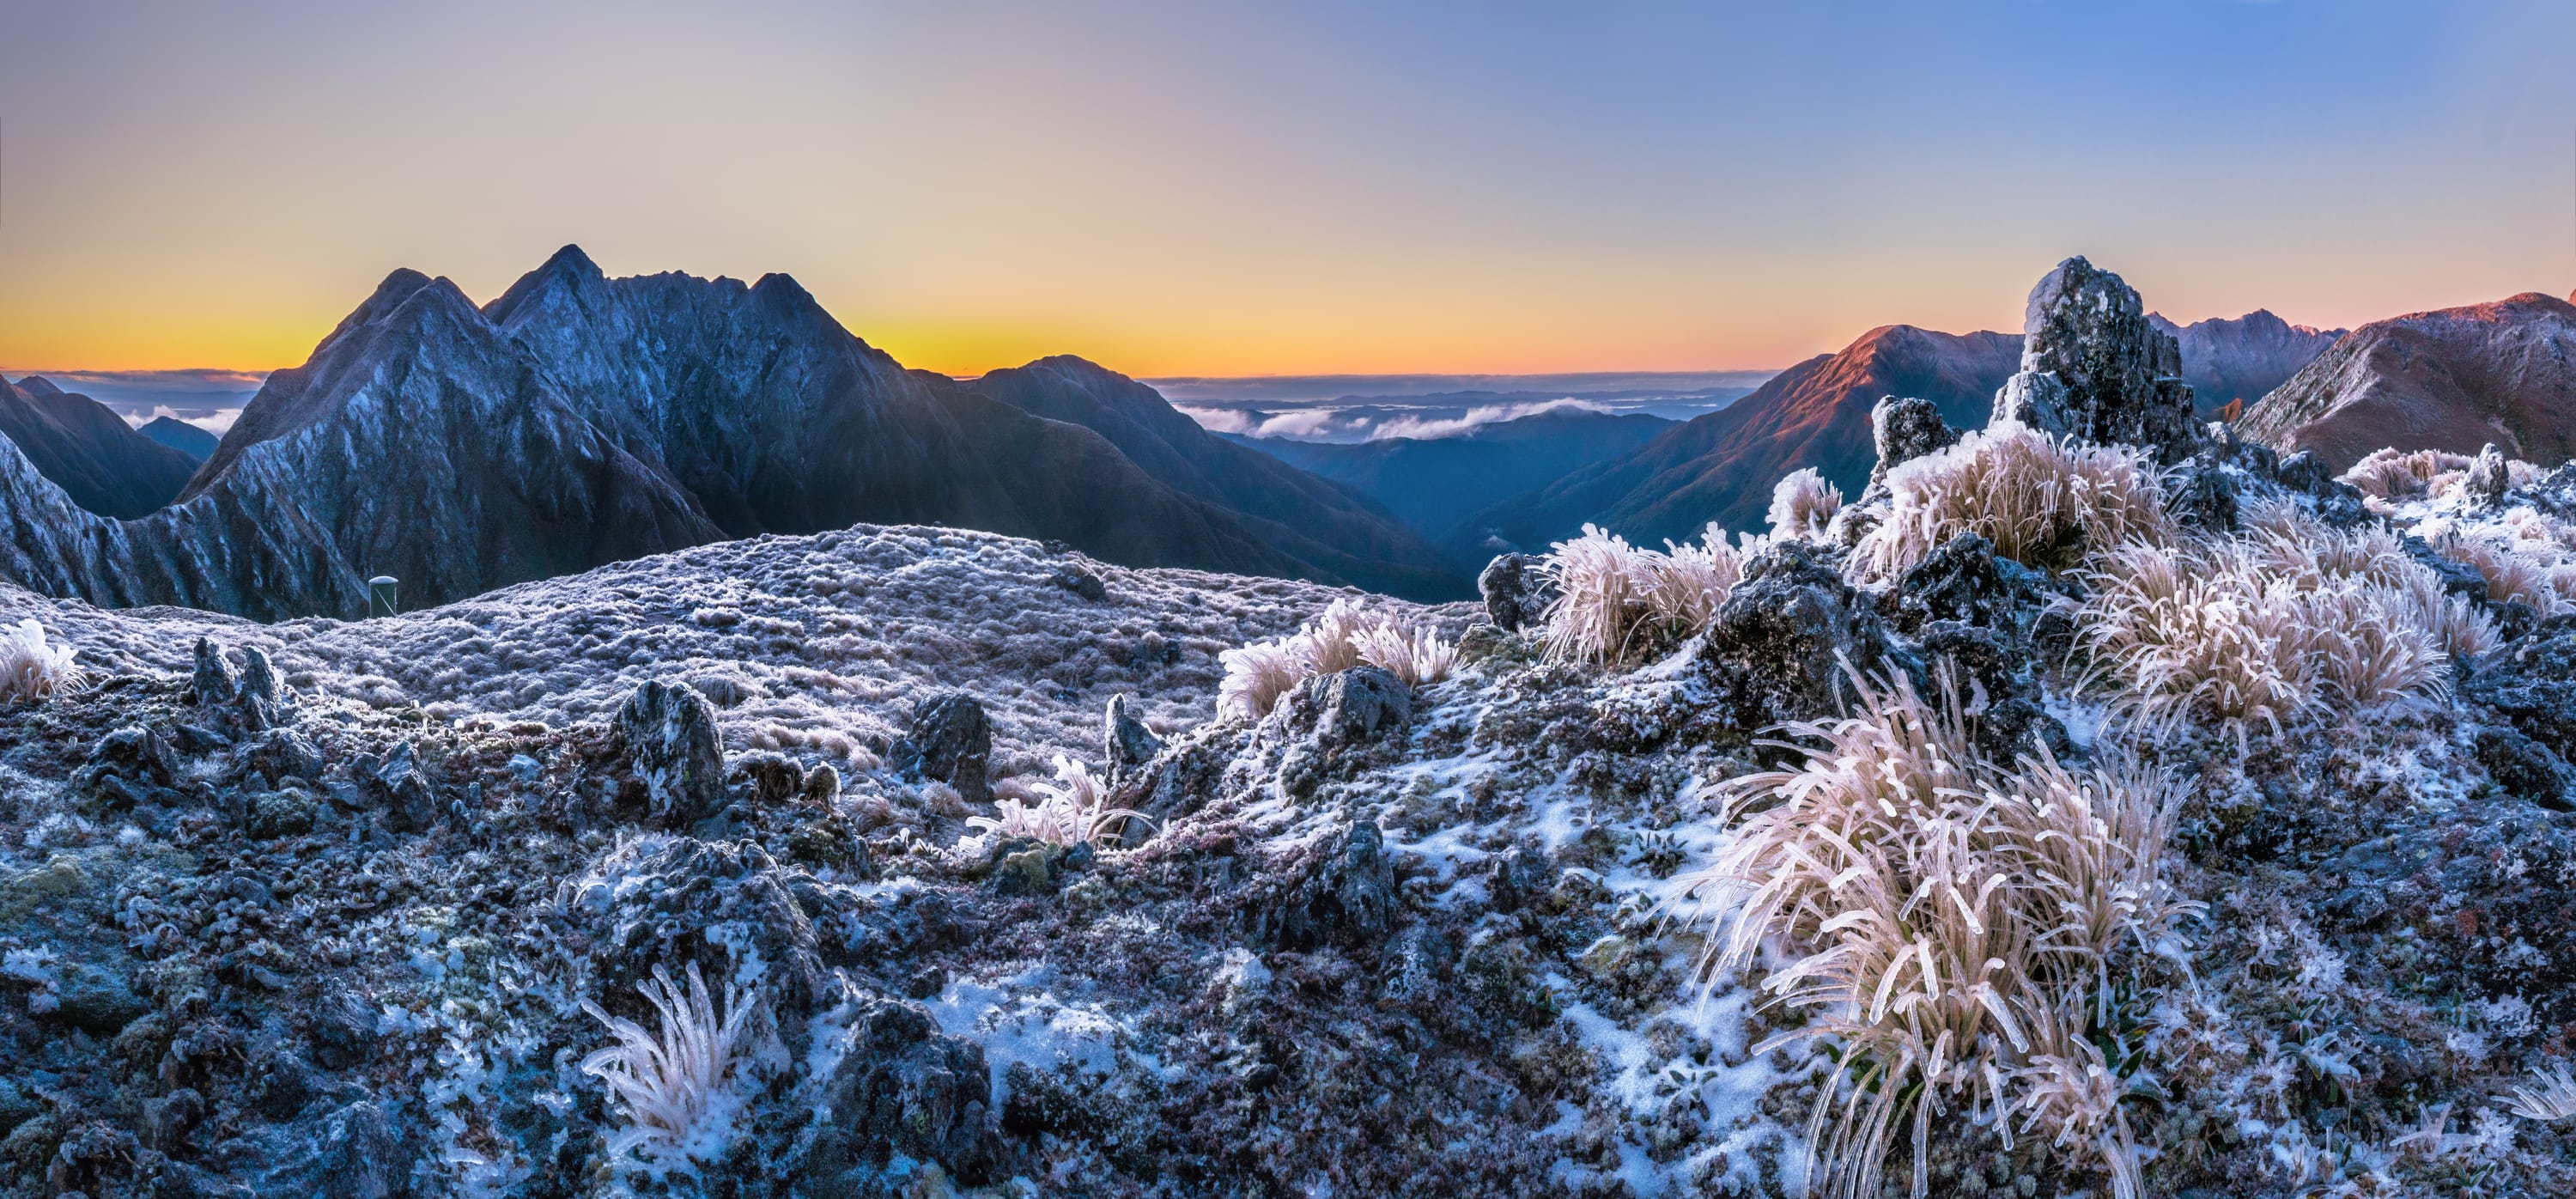 Photographic locations worth sweating for: Arete Hut, Tararua Ranges